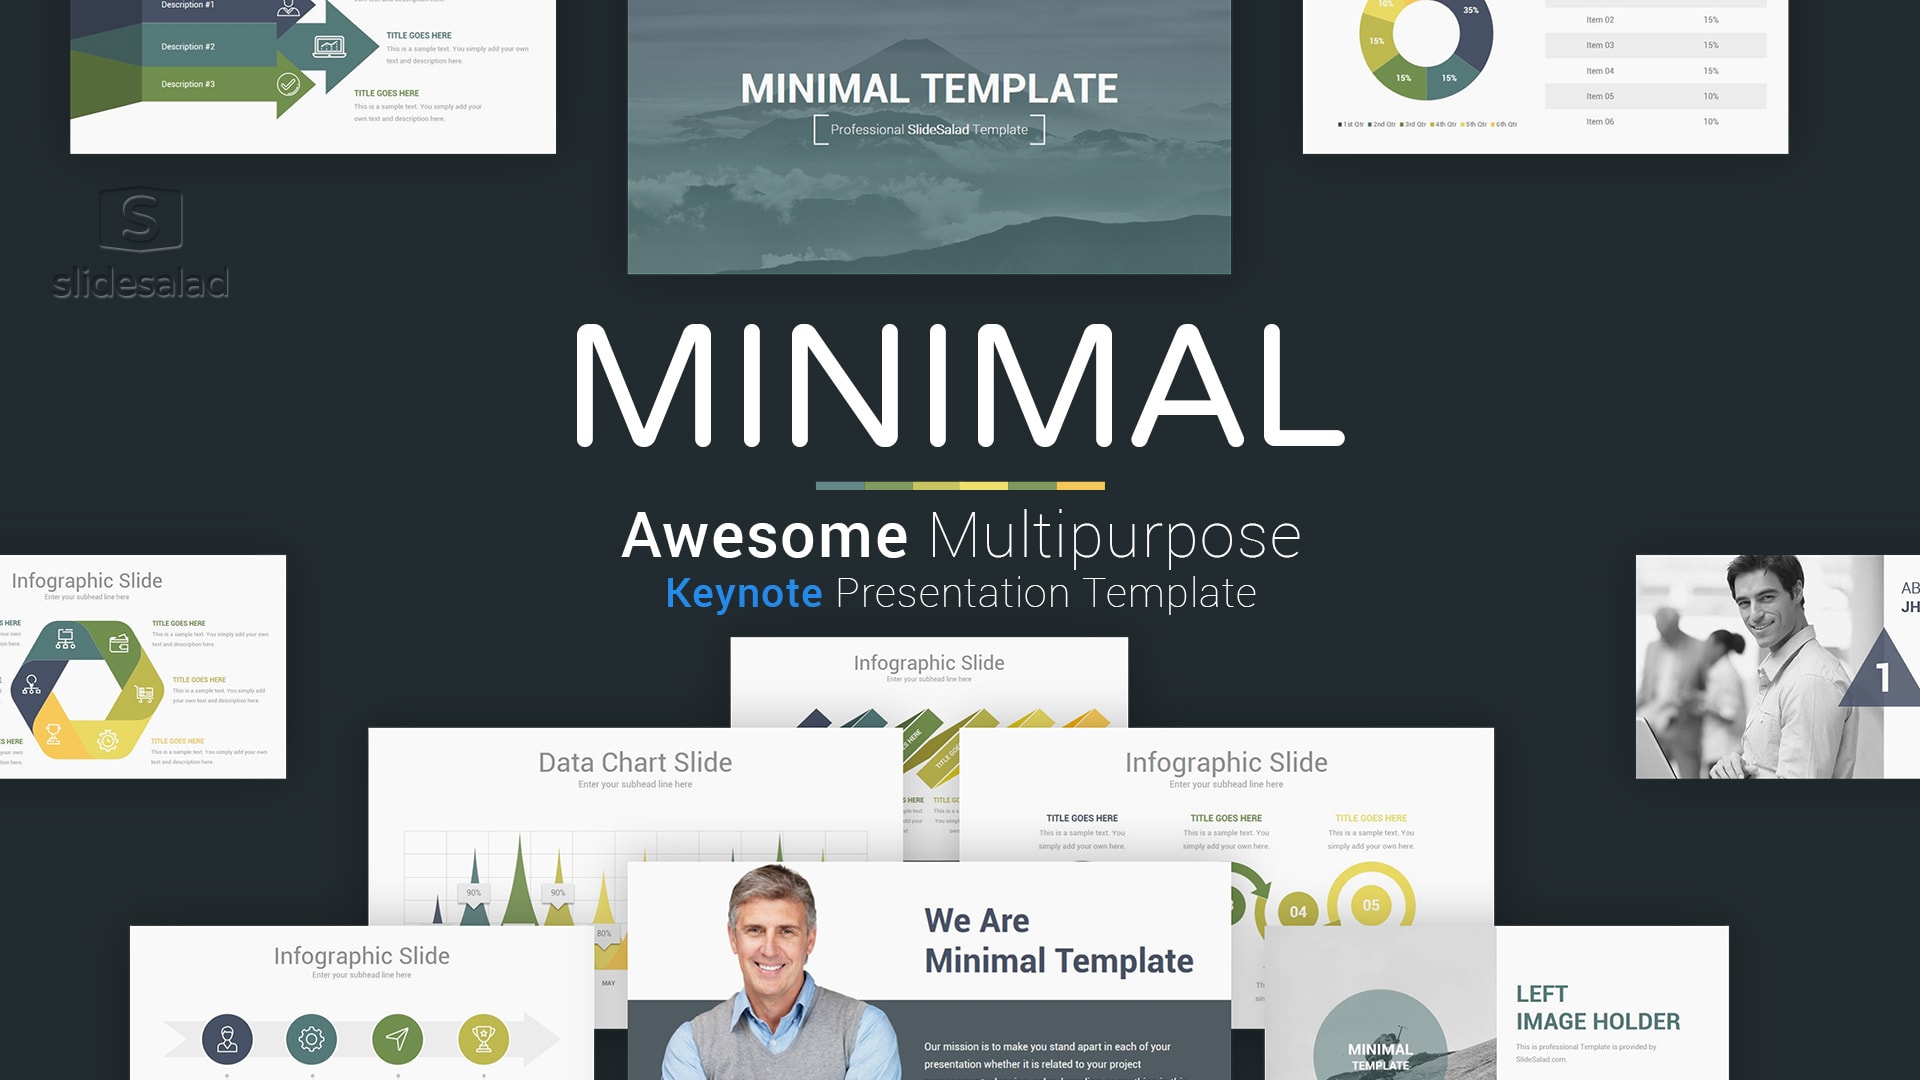 Minimal Keynote Presentation Template Design